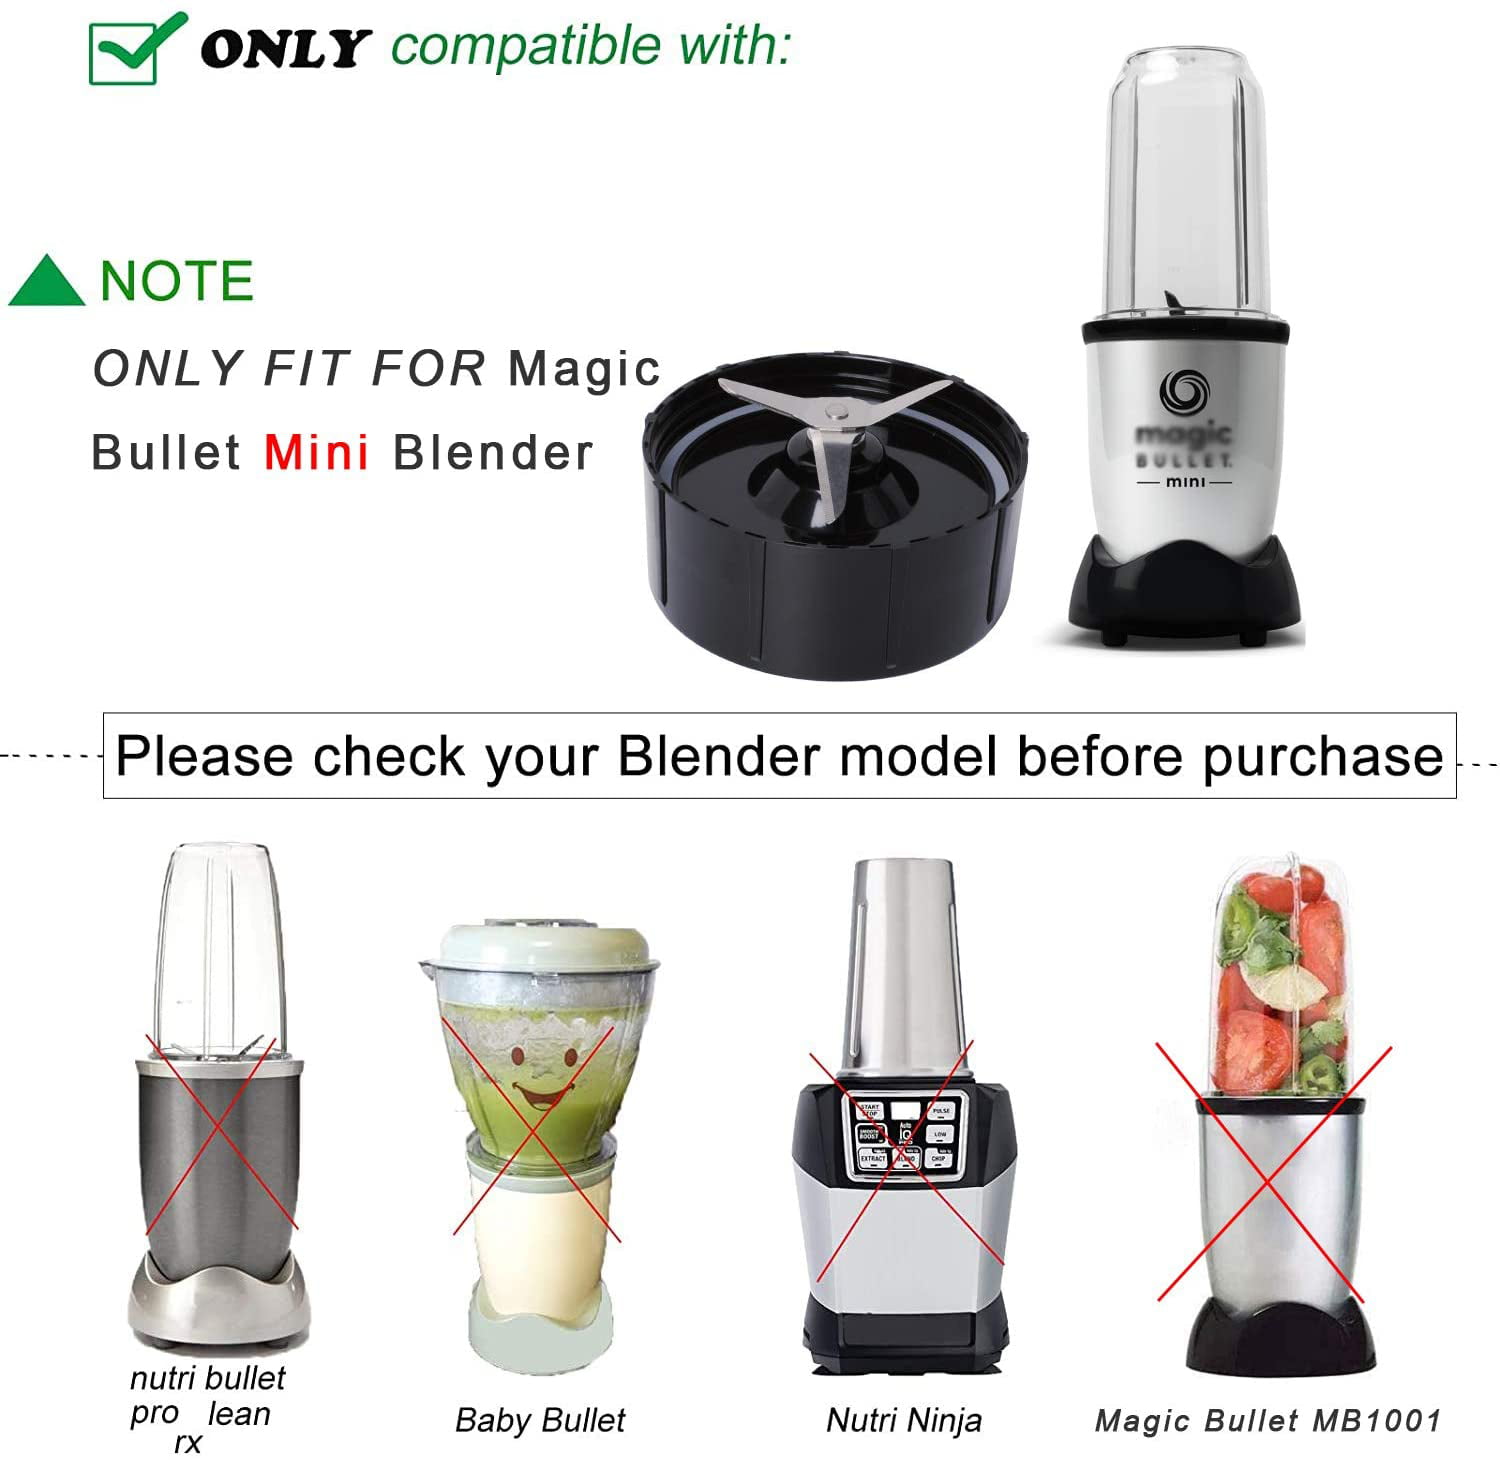 Two Pack of Ice Shaver Blades for Magic Bullet Blender (Model